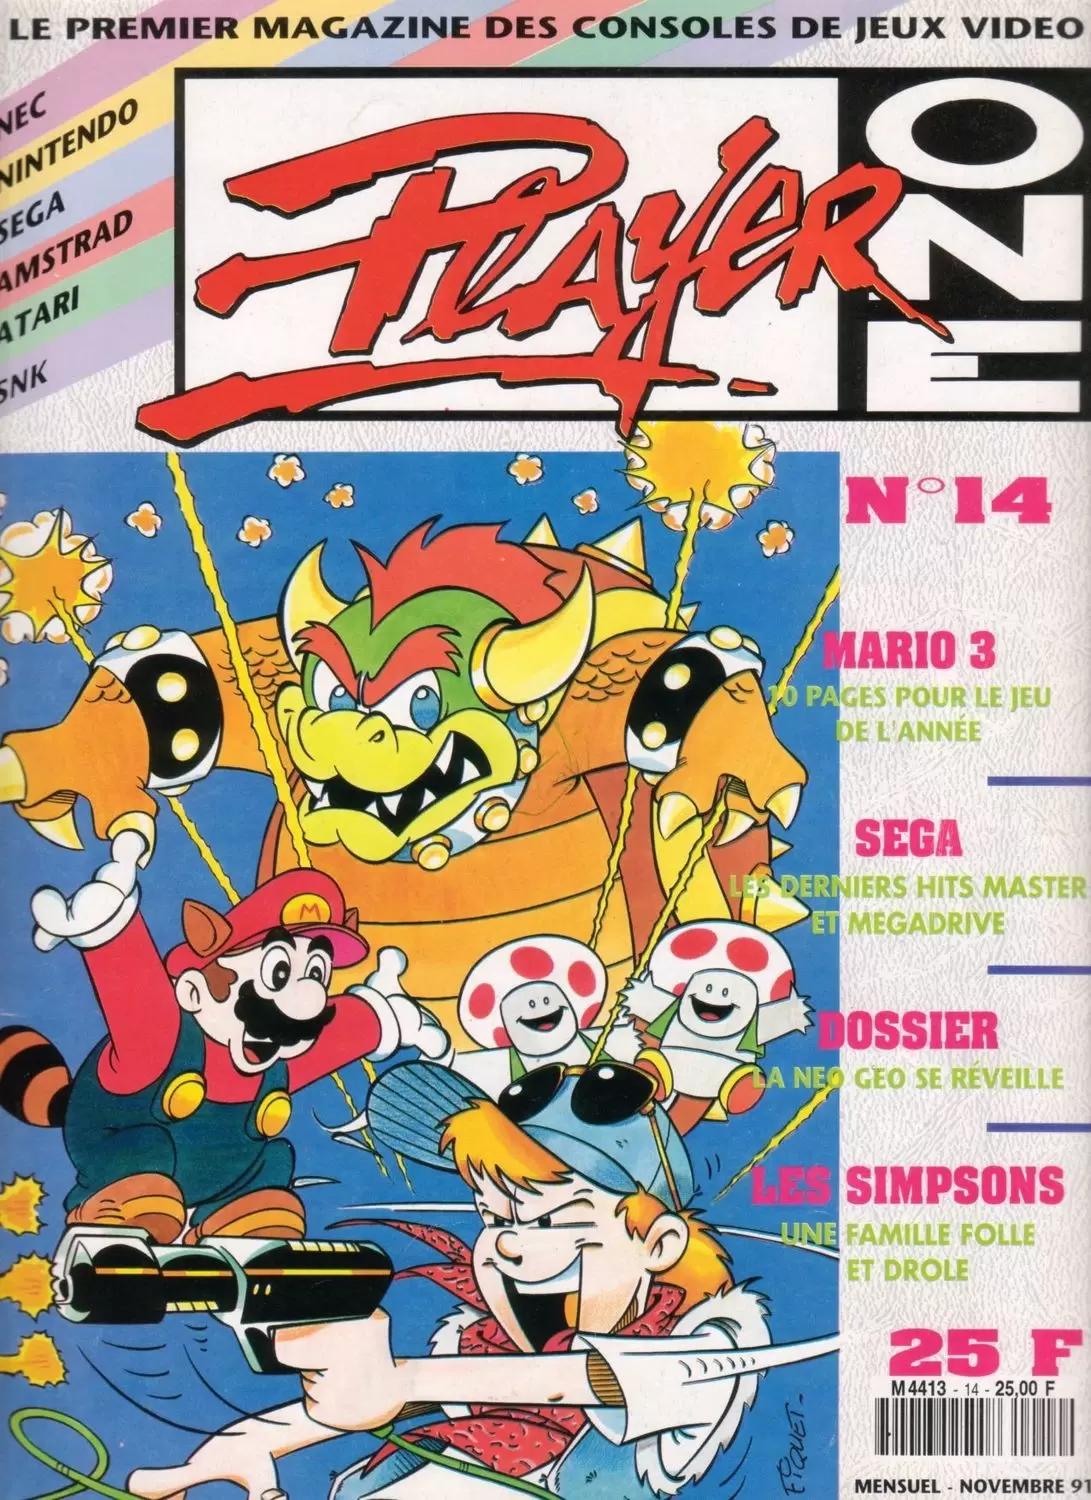 Player One - Magazine N°014